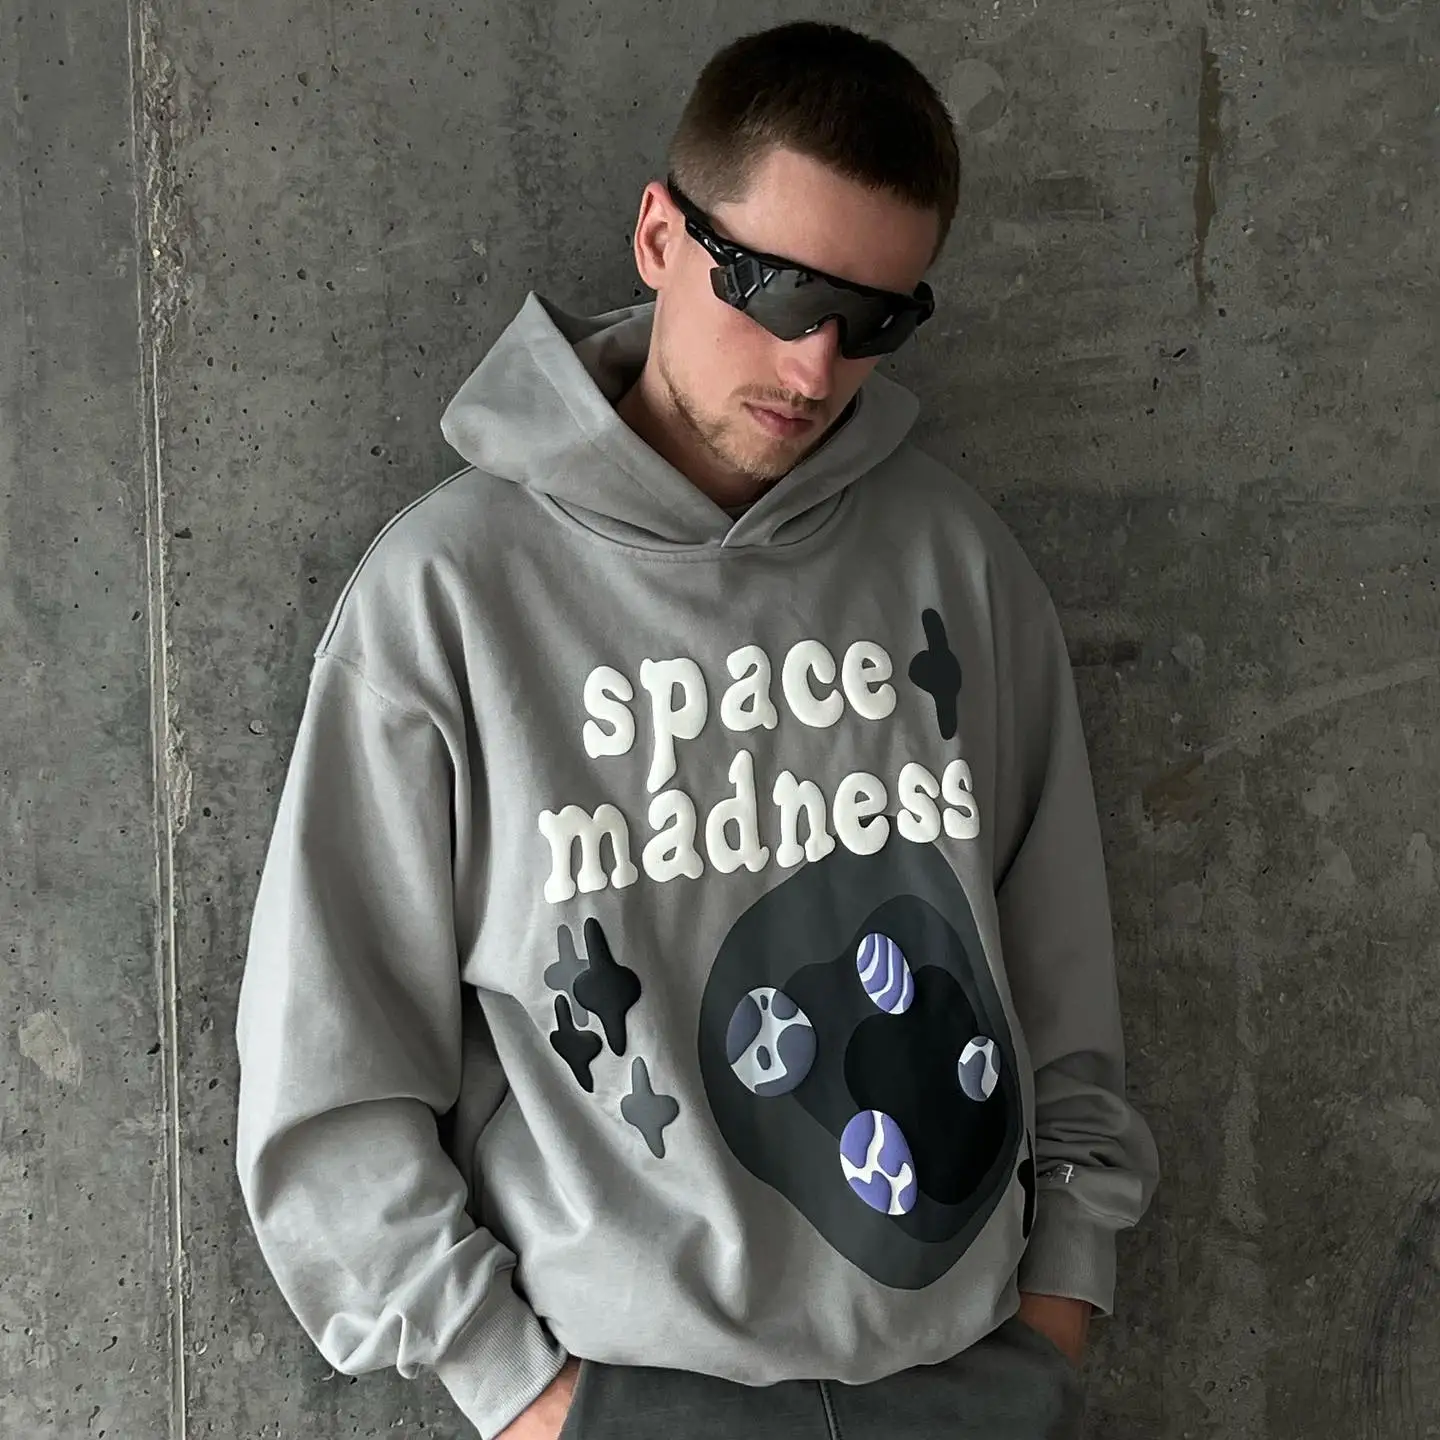 3D Letters Oversized Sweatshirt Unisex Hoodies - true deals cub